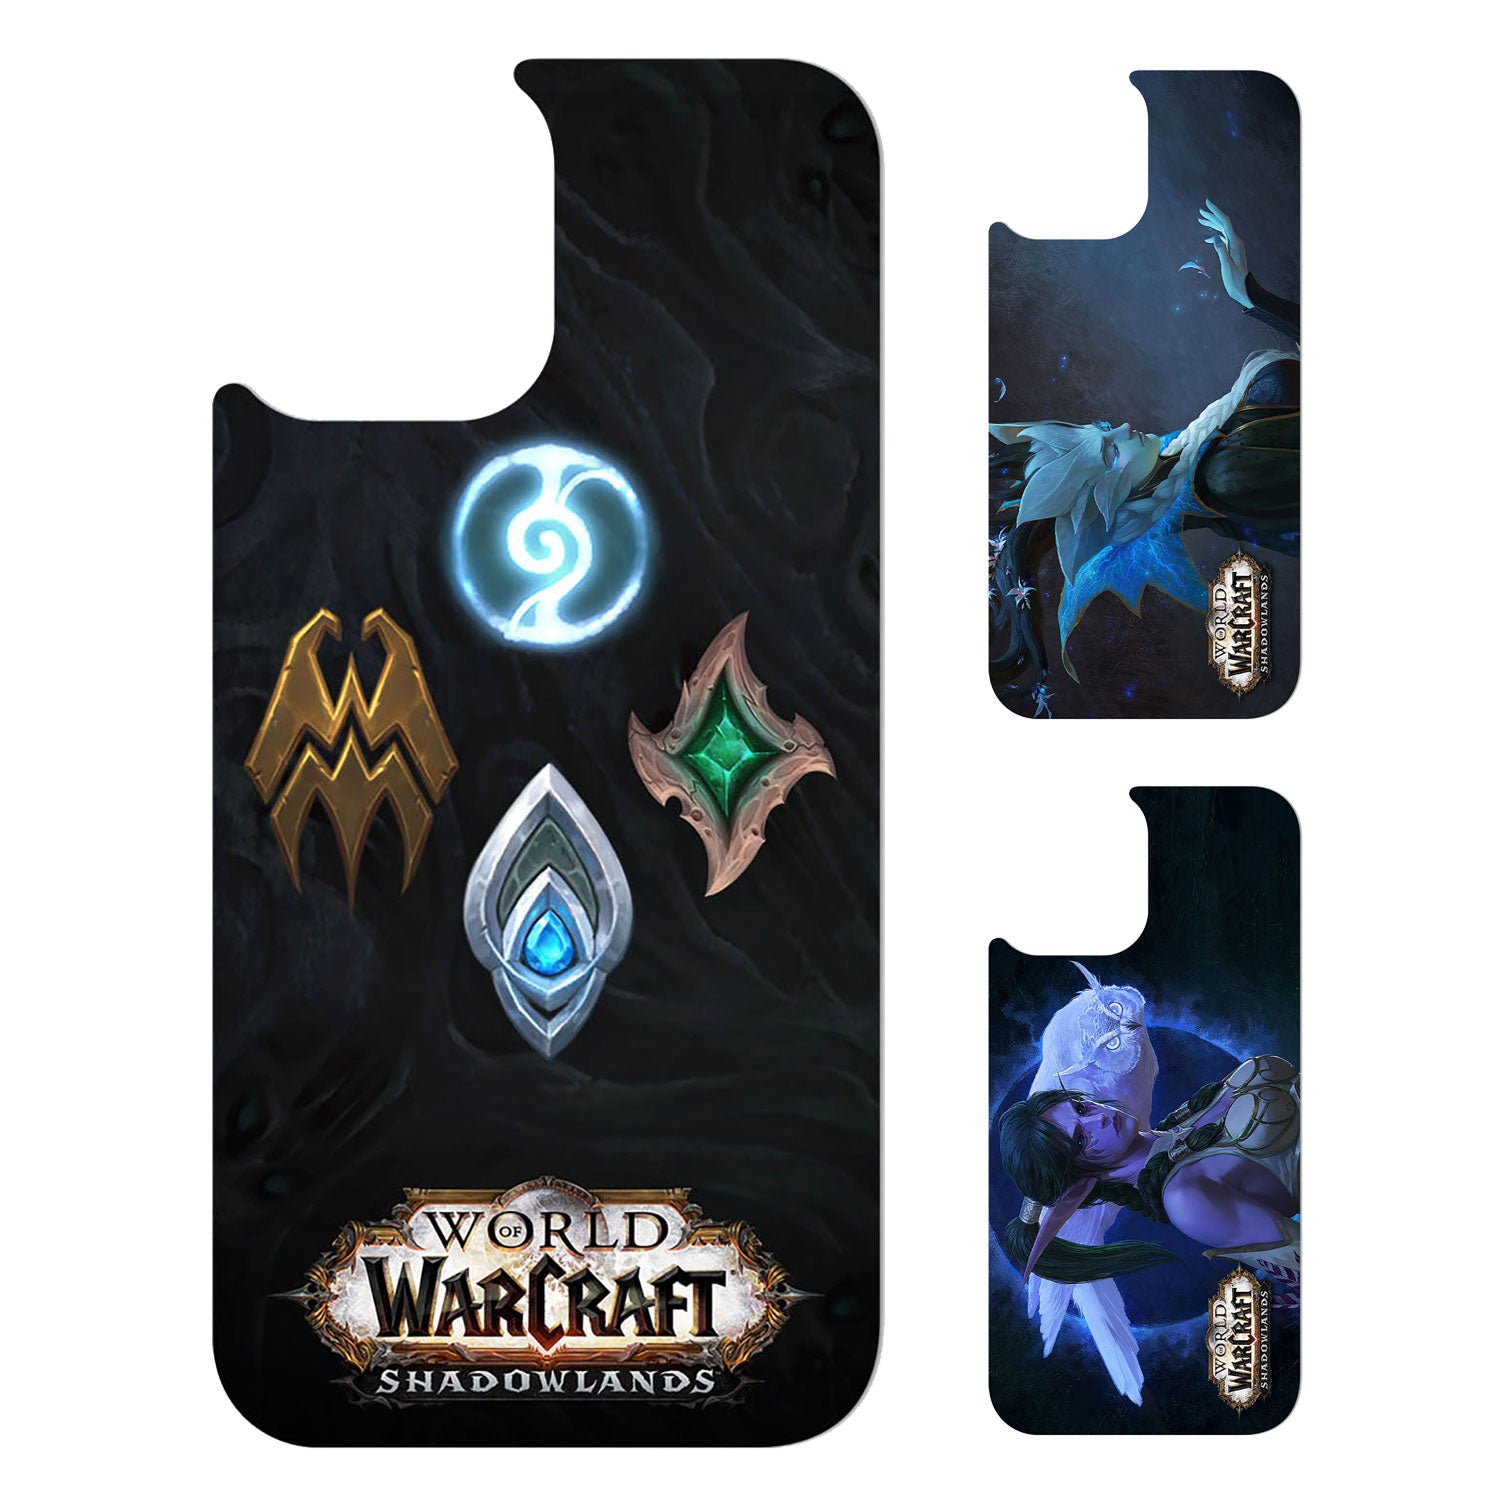 World of Warcraft Shadowlands InfiniteSwap Phone Pack - Main Image